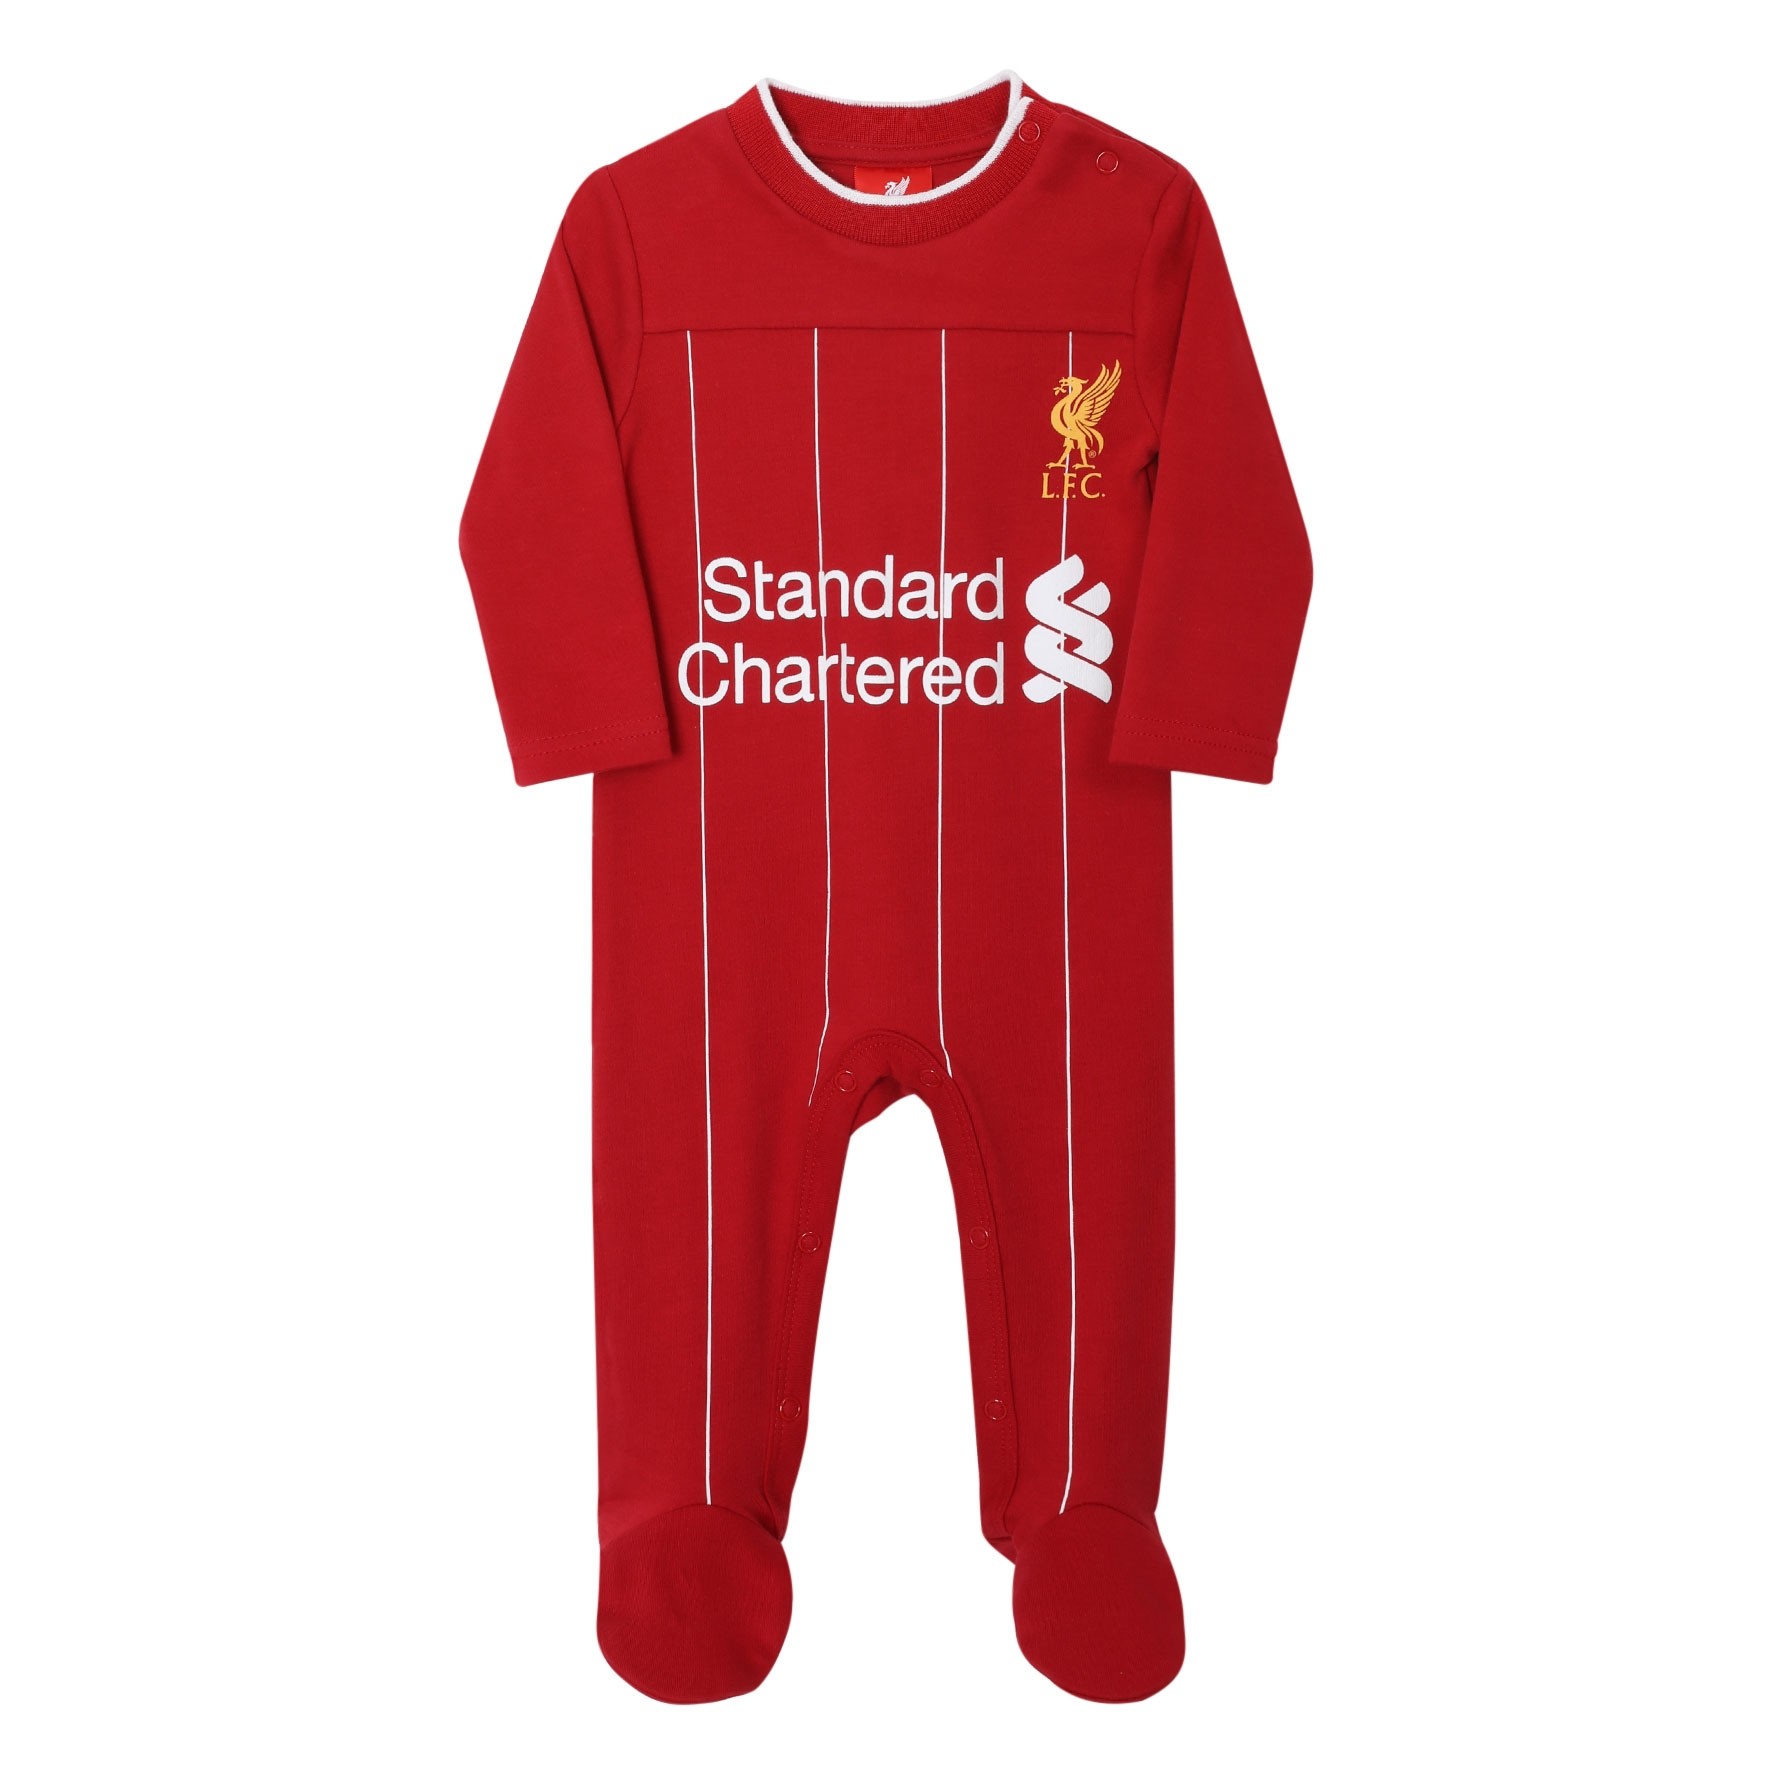 LFC Baby Kit Sleepsuit 19/20